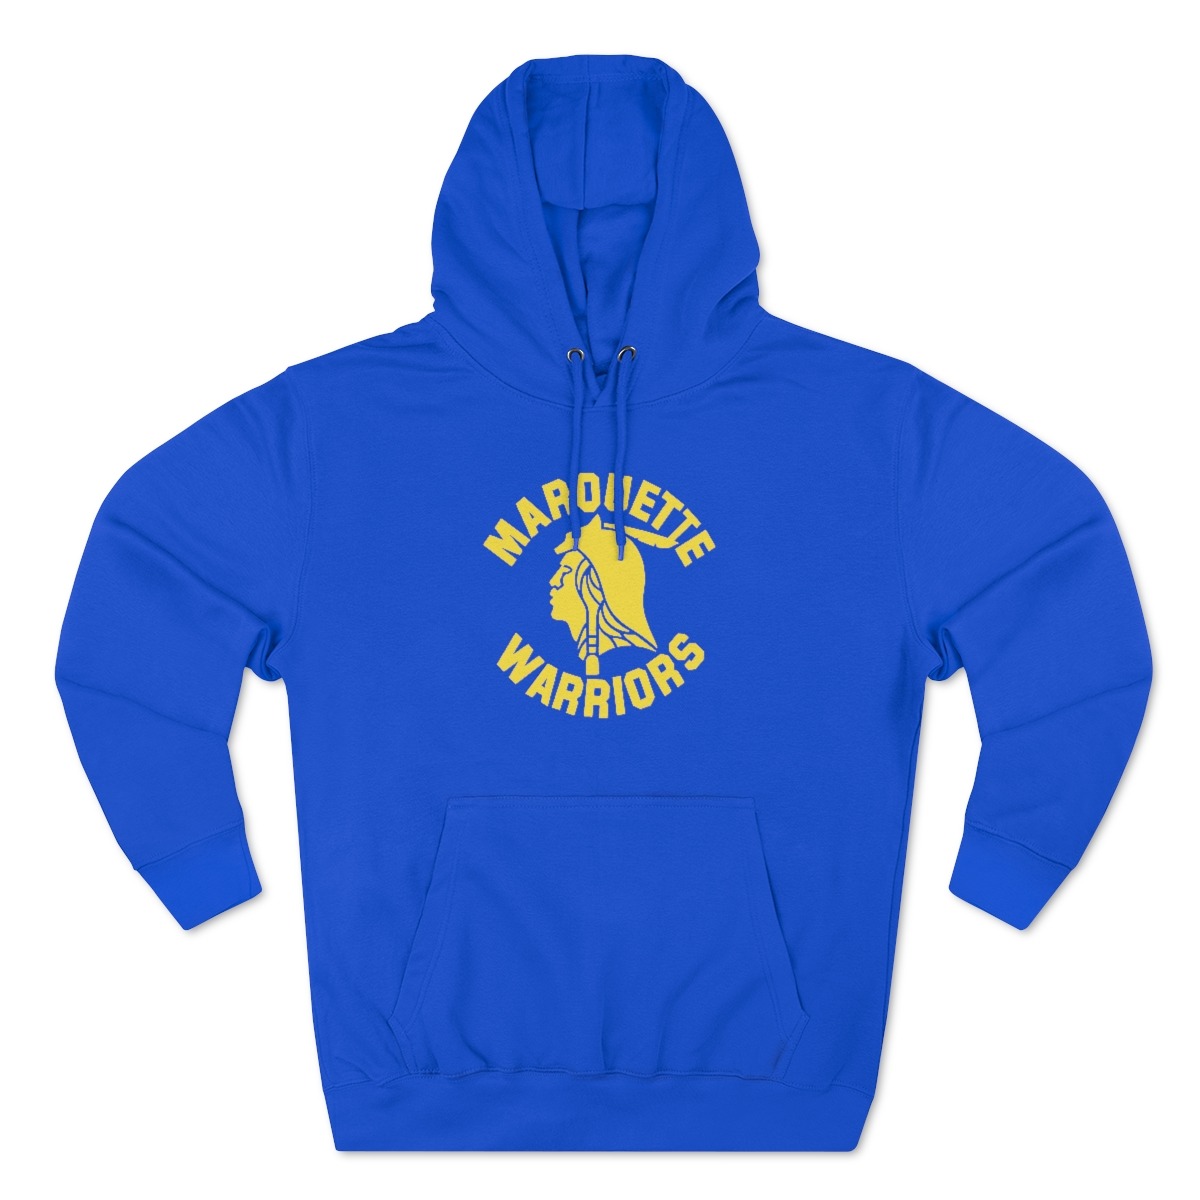 Marquette Warriors merch - Marquette Warriors clothing - Marquette Warriors apparel